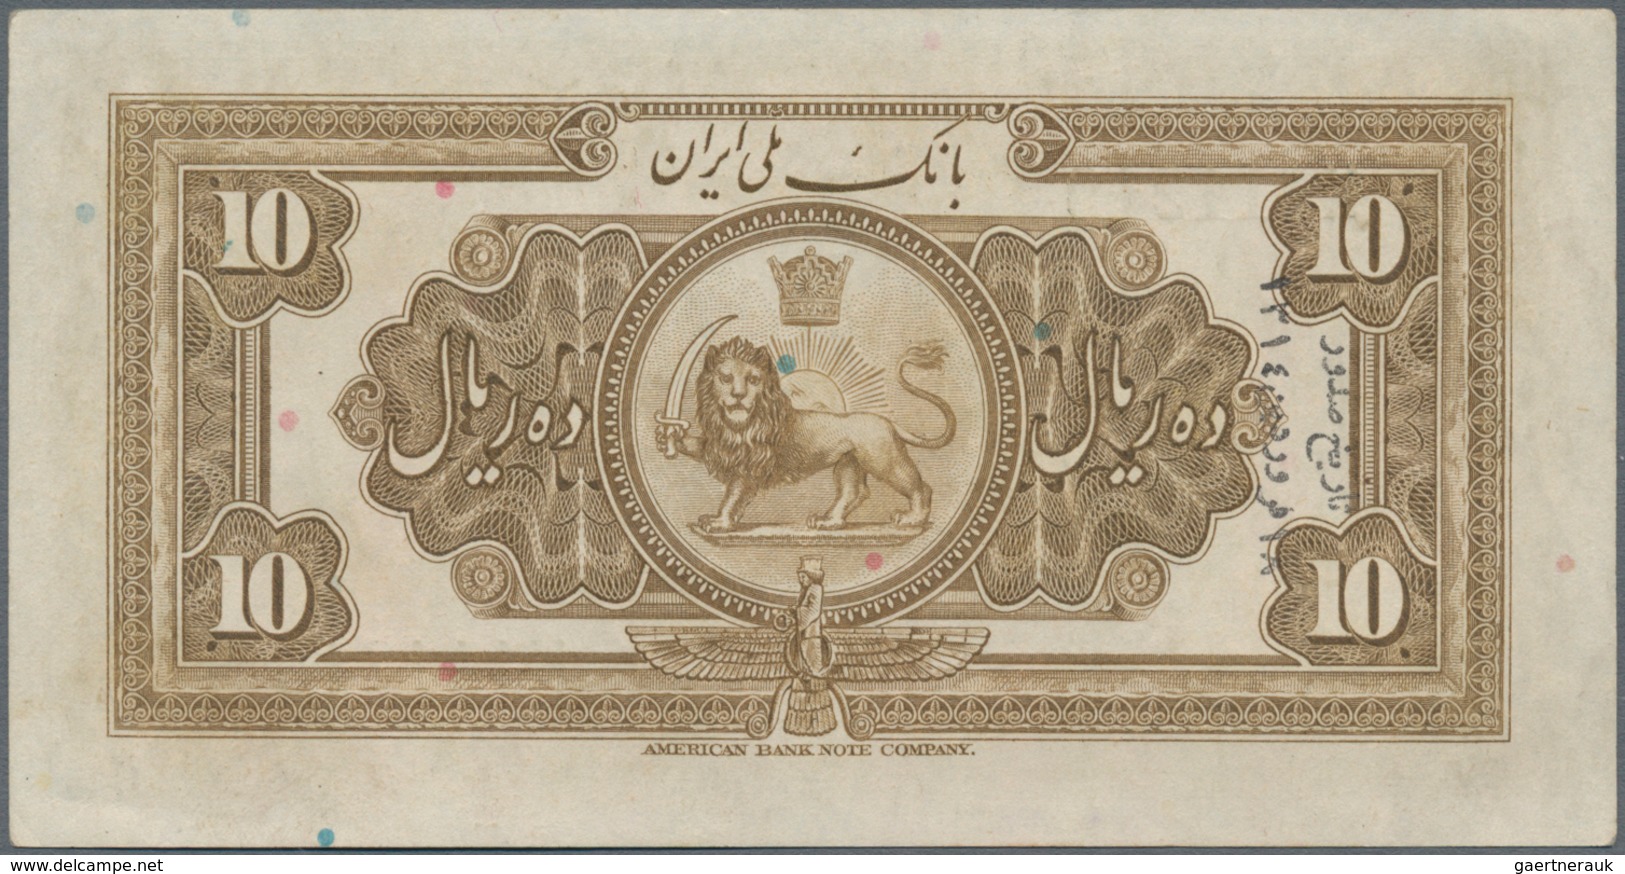 Iran: Bank Melli Ran, Pair Of The 10 Rials SH1313 (1934) P.25a With Almost Consecutive Numbers K1112 - Iran